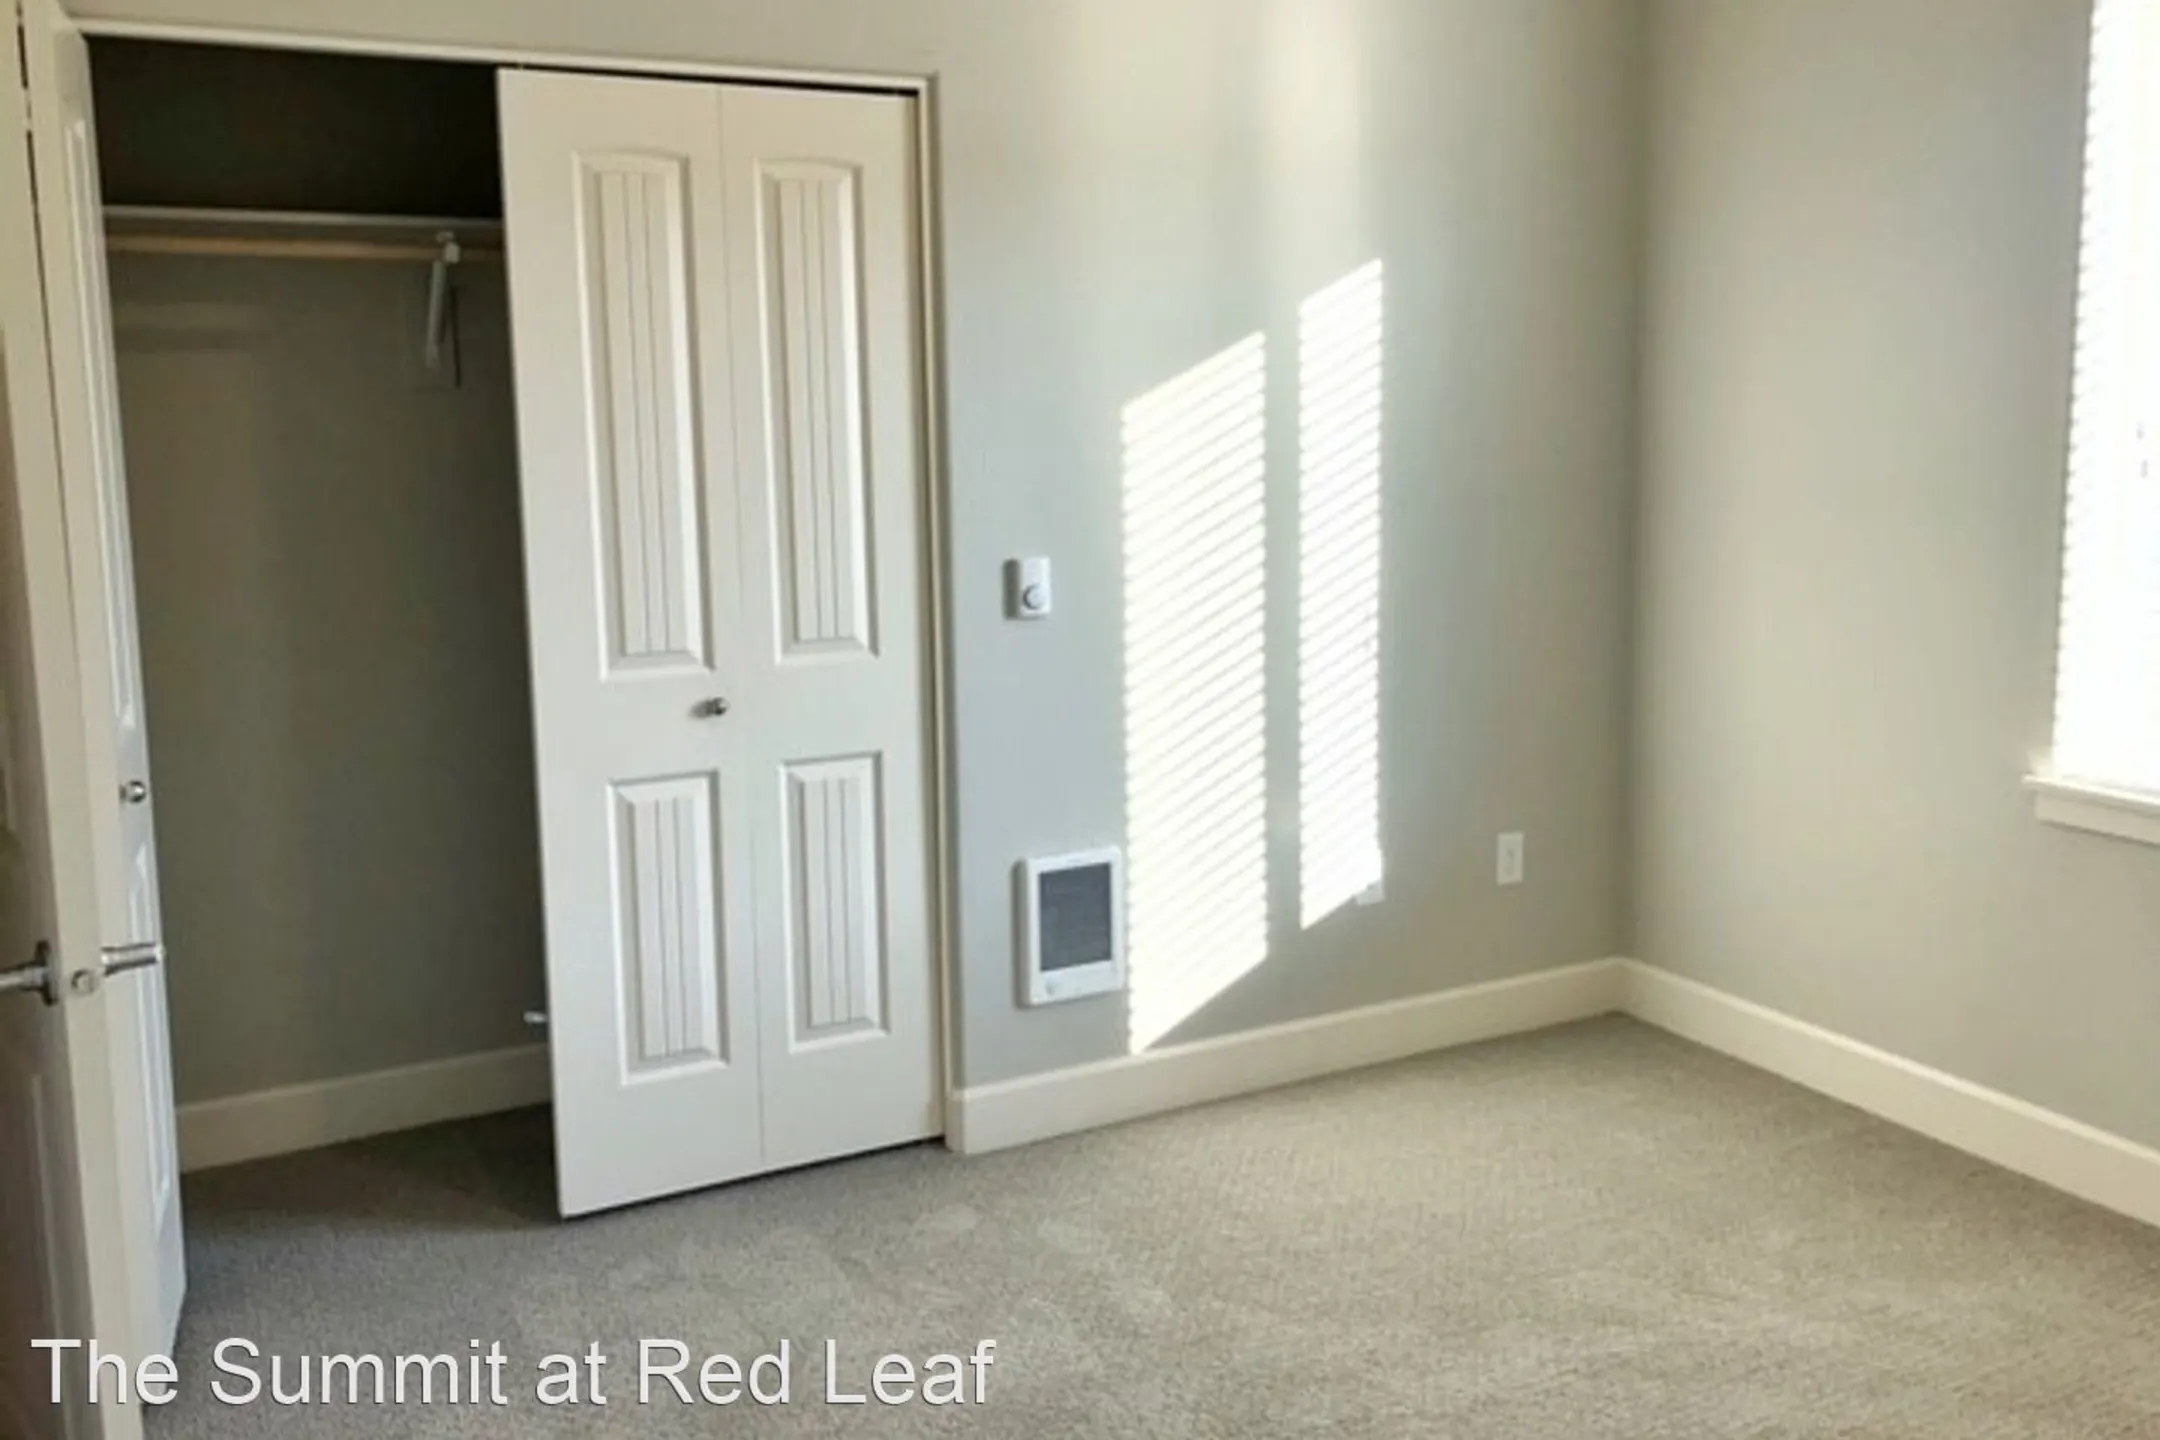 Bedroom - The Summit at Red Leaf - Salem, OR